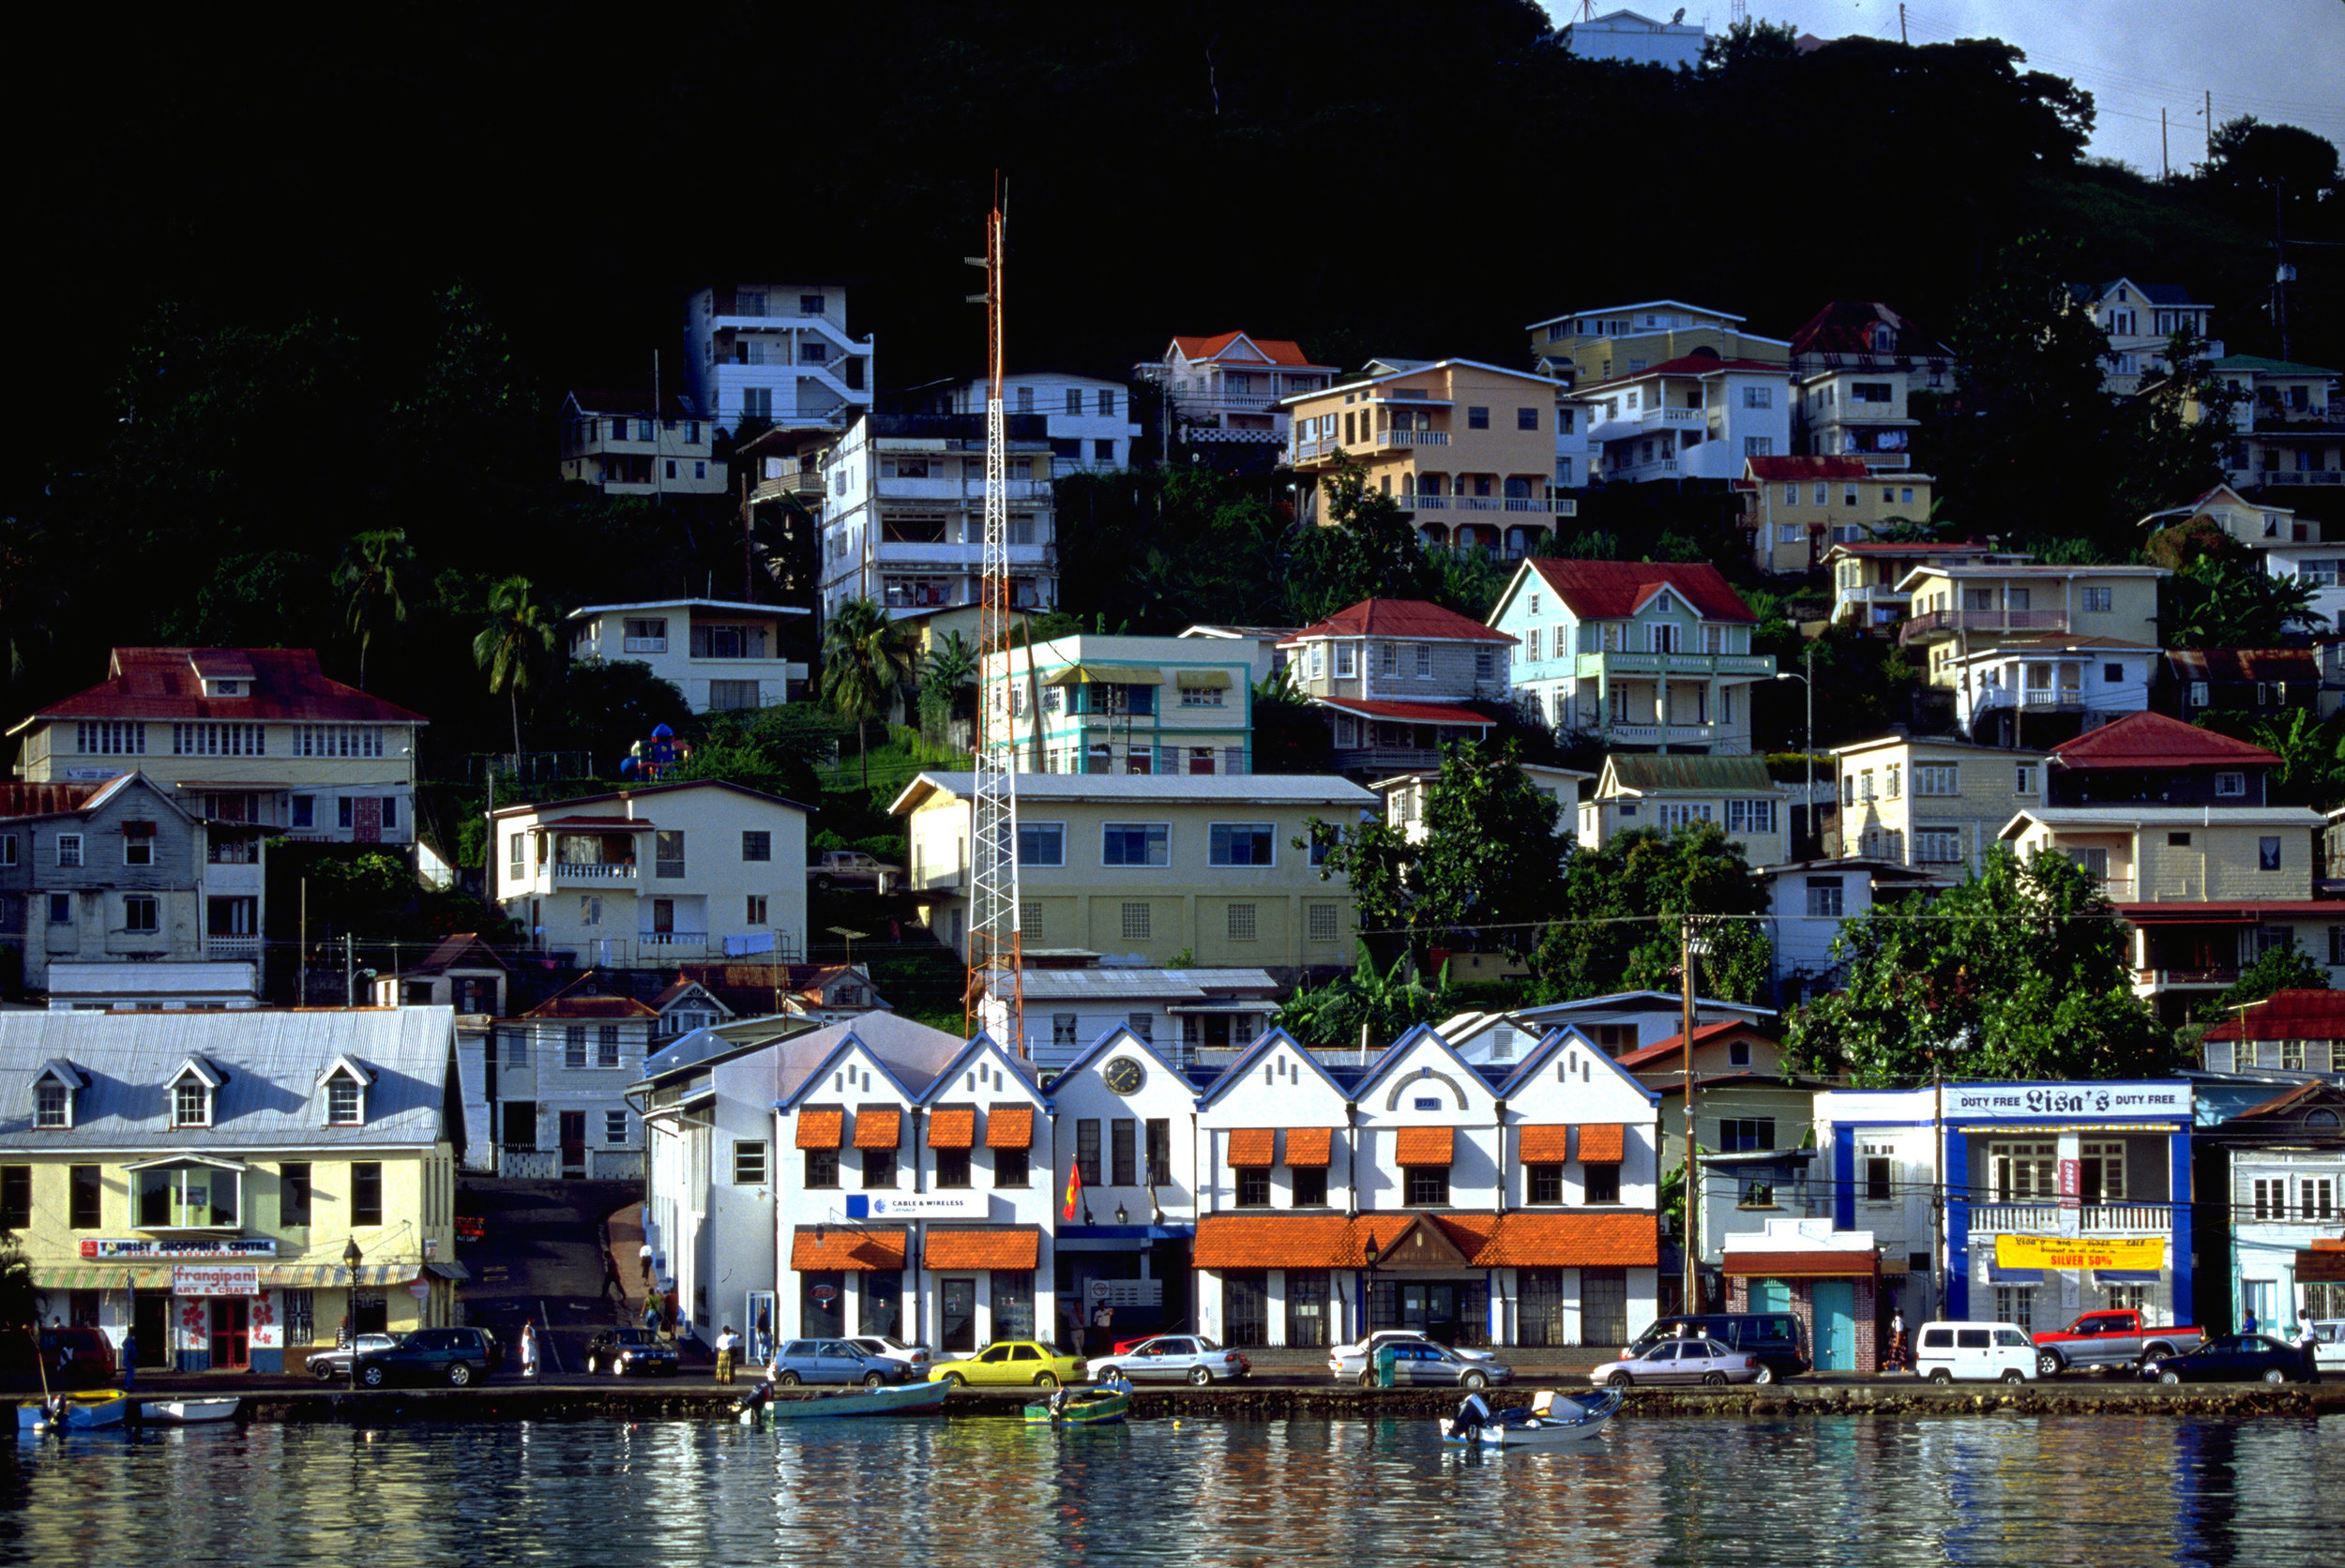 “Image courtesy of Grenada Board of Tourism”